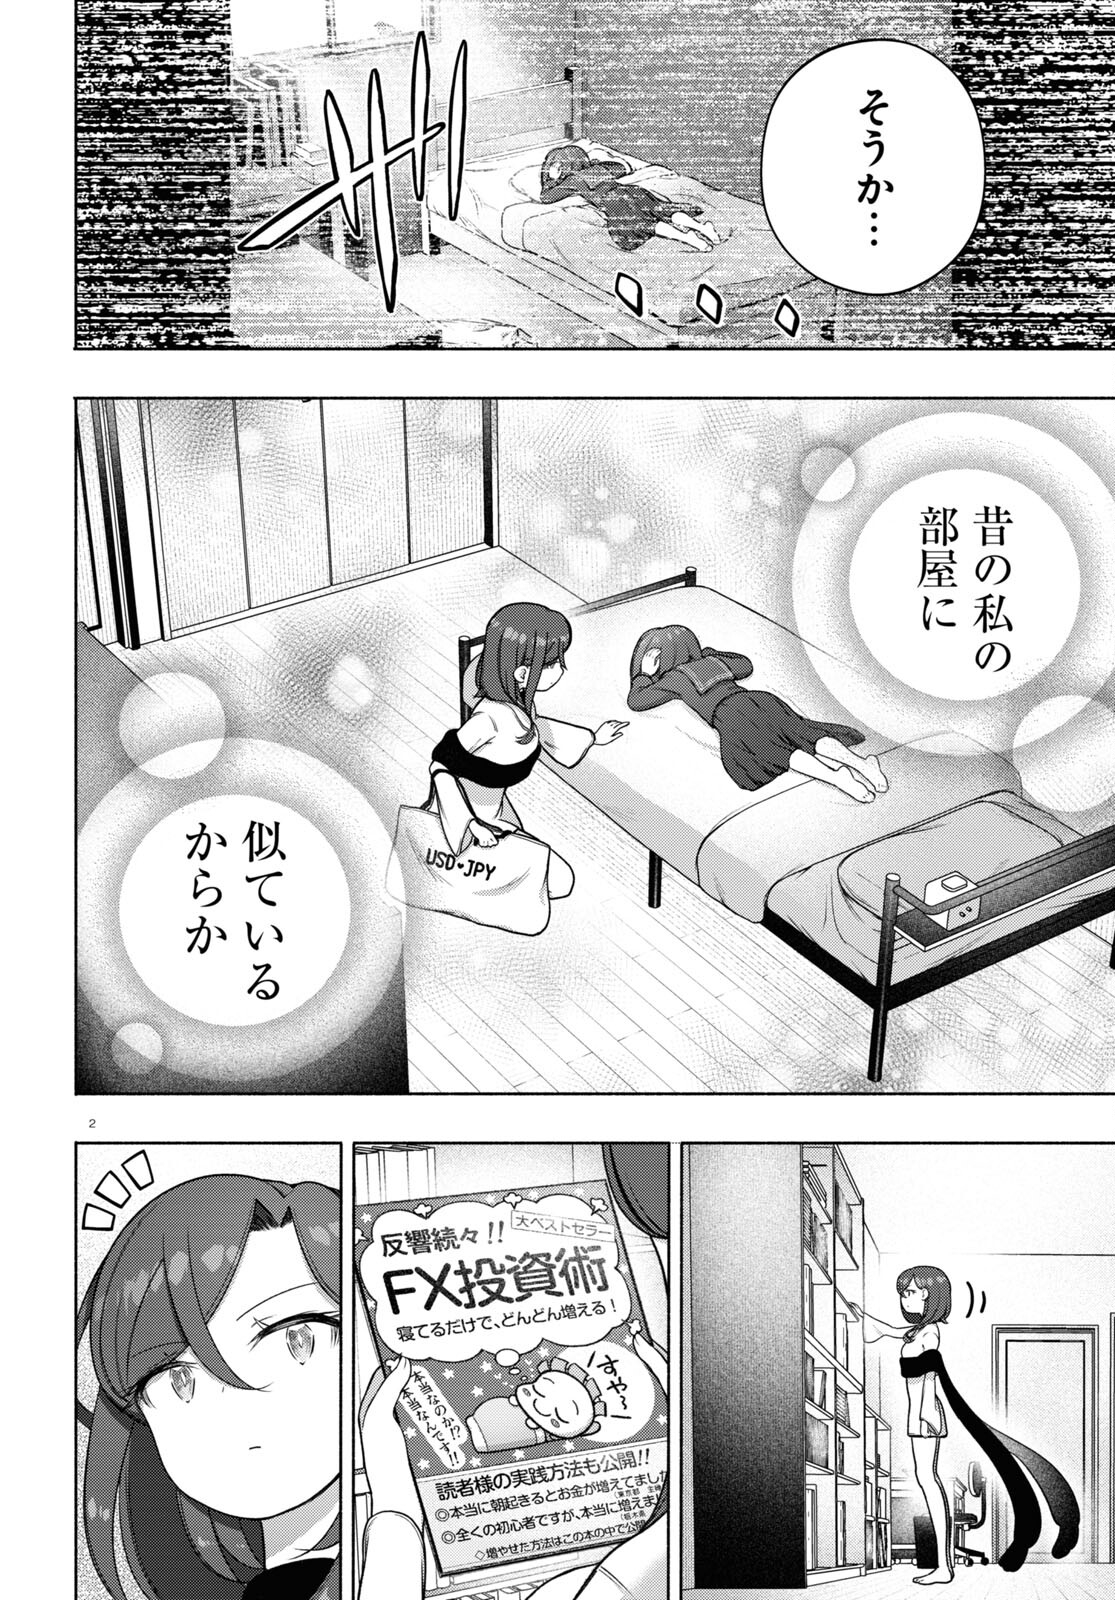 FX Senshi Kurumi-chan - Chapter 32 - Page 2